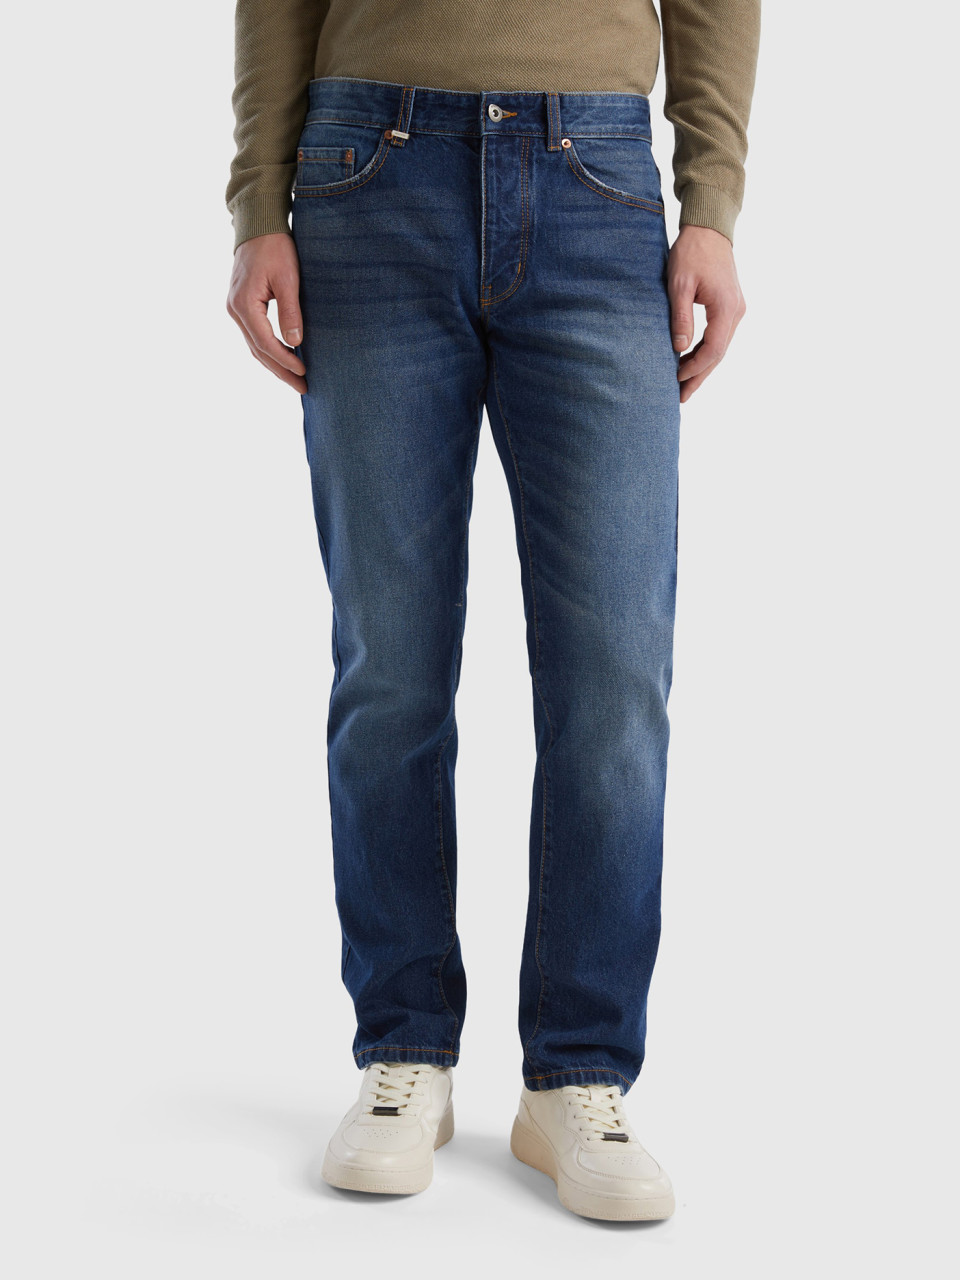 Benetton, Jeans Straight-fit, Dunkelblau, male